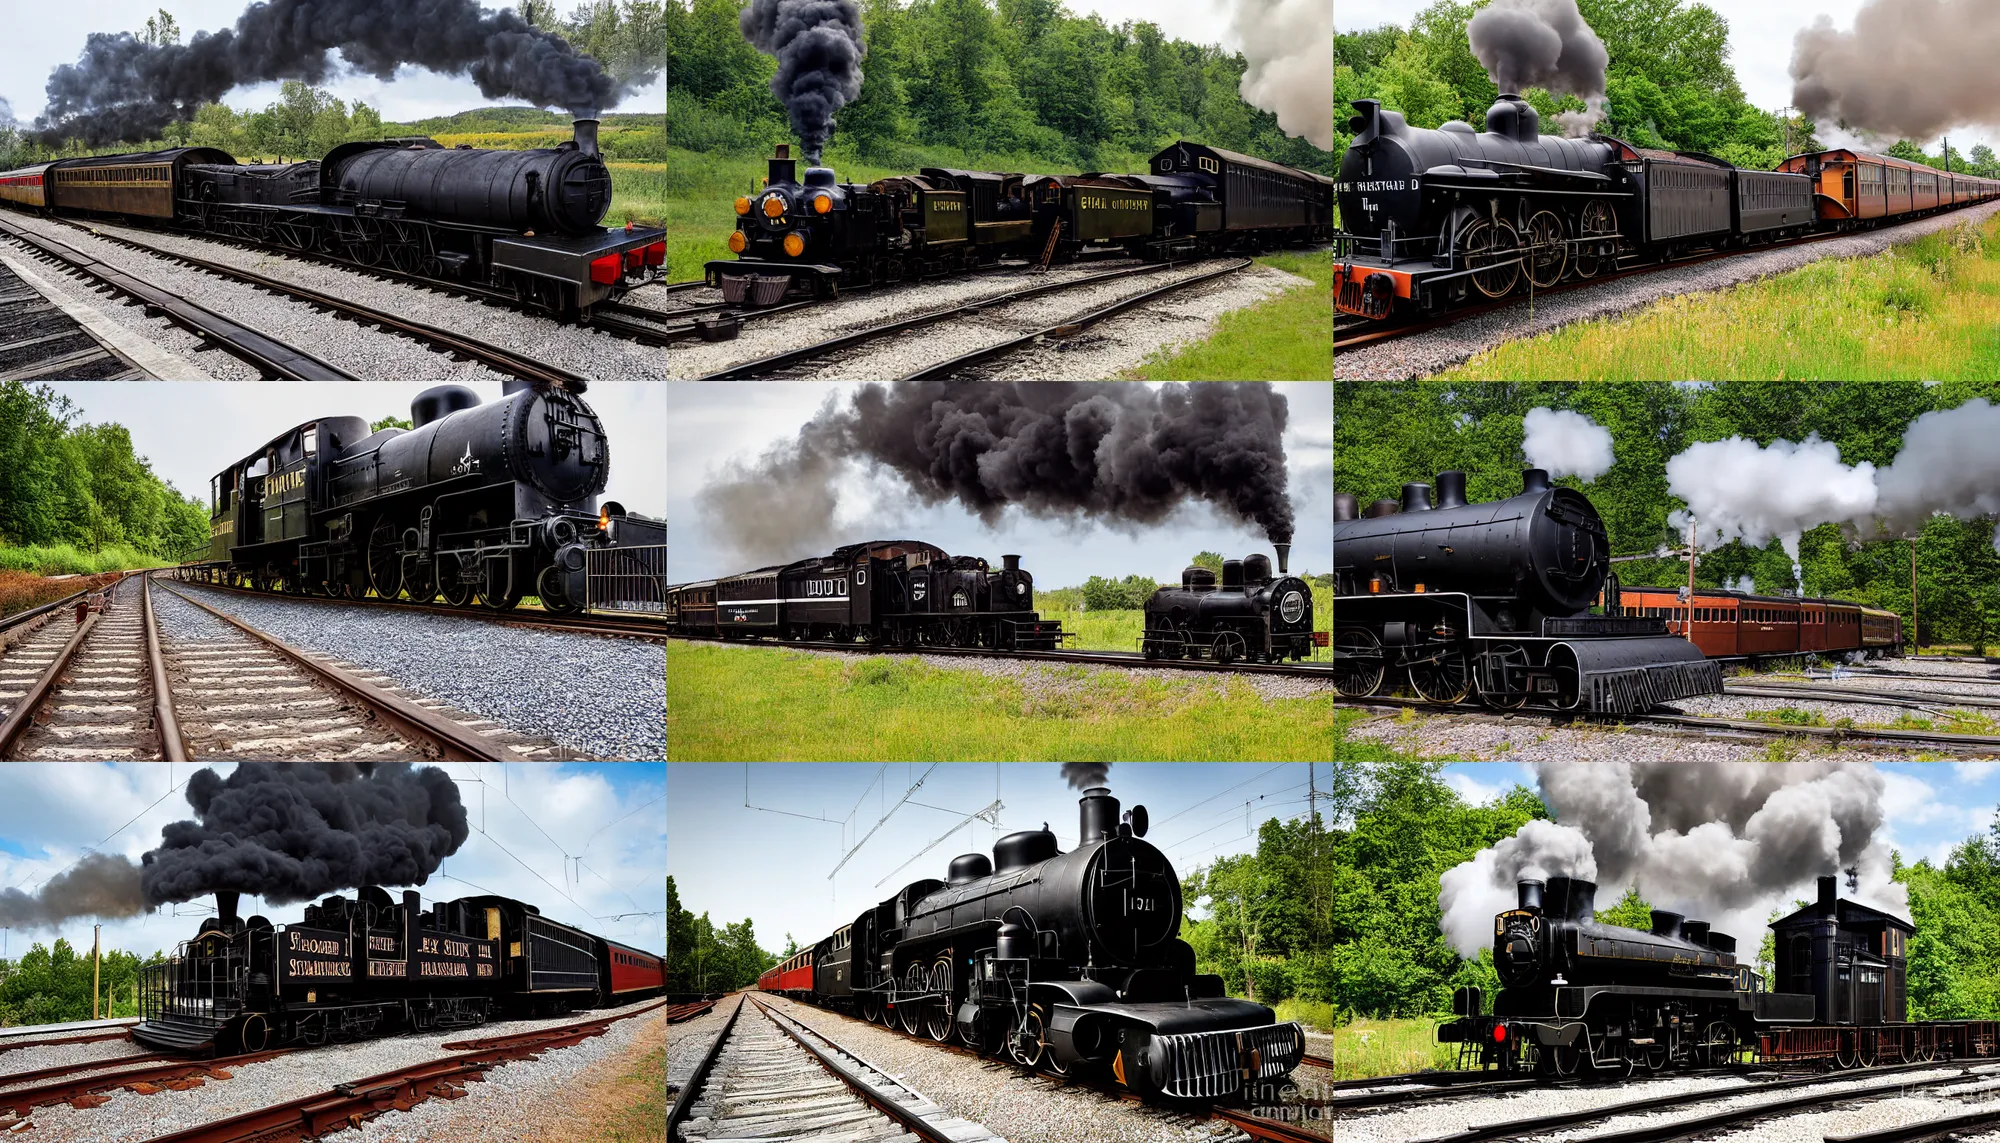 Prompt: restored black steam locomotive travelling on train tracks, photograph